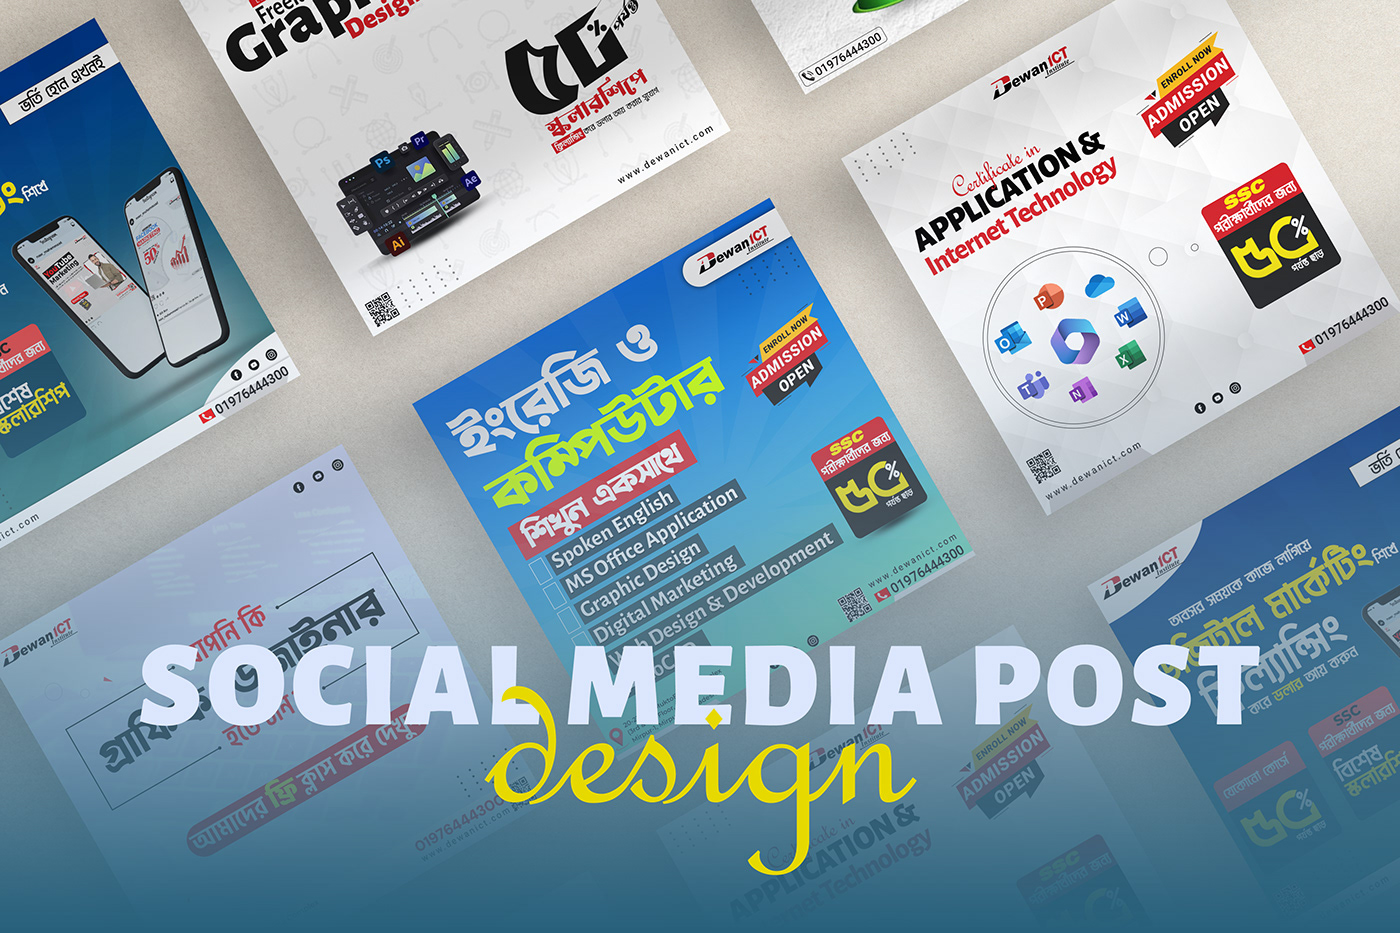 Design for social media post,
Graphic Design, Social Media Post Design, visual,  
as visual acumen